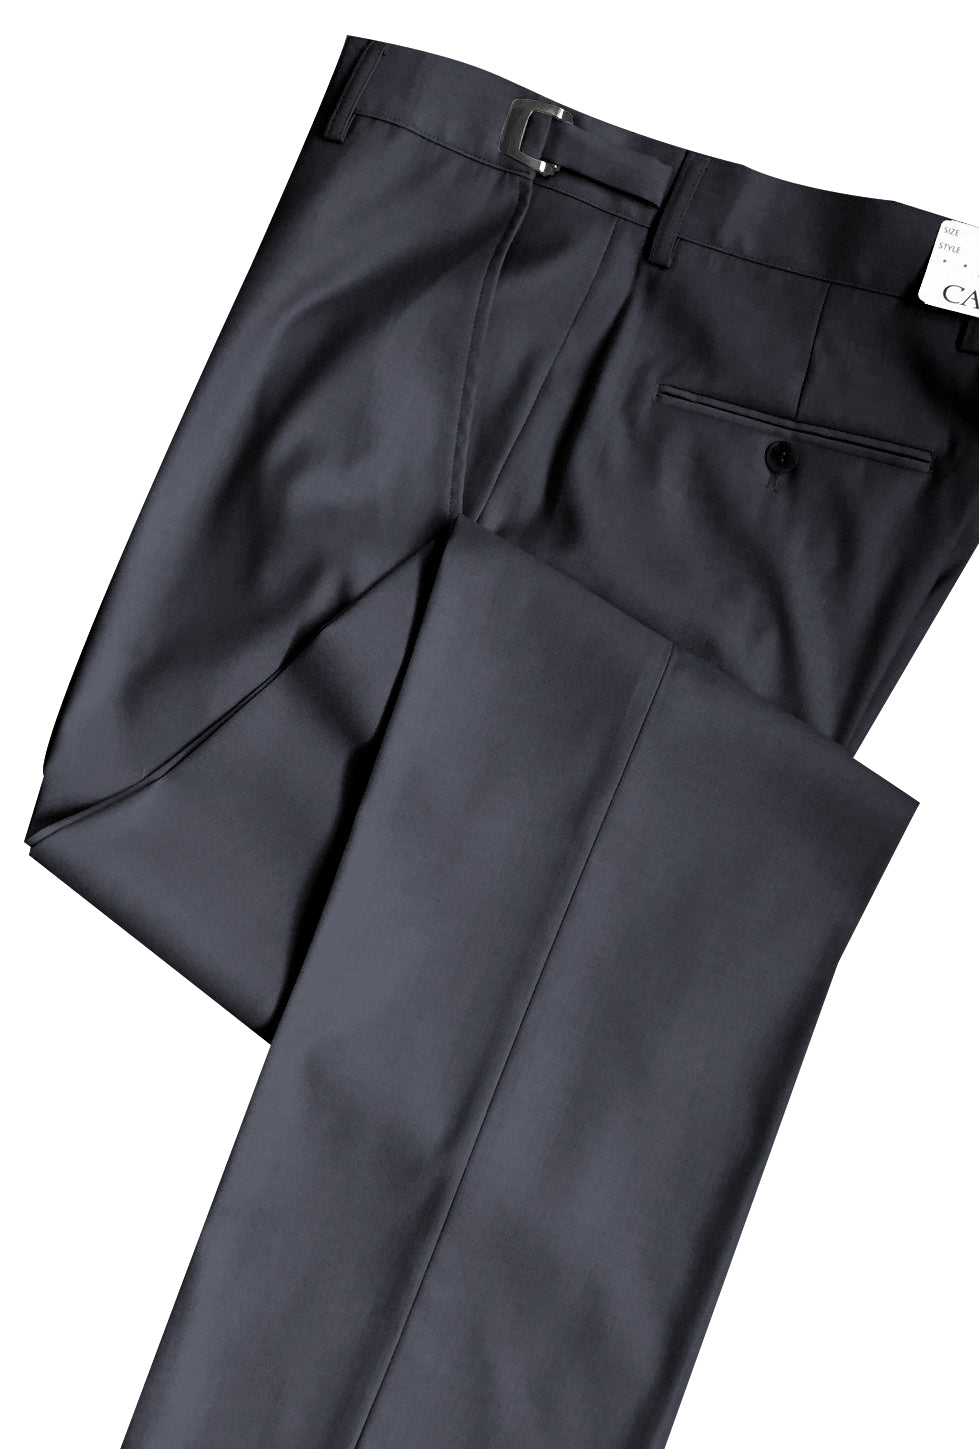 Steel Grey Suit Pants